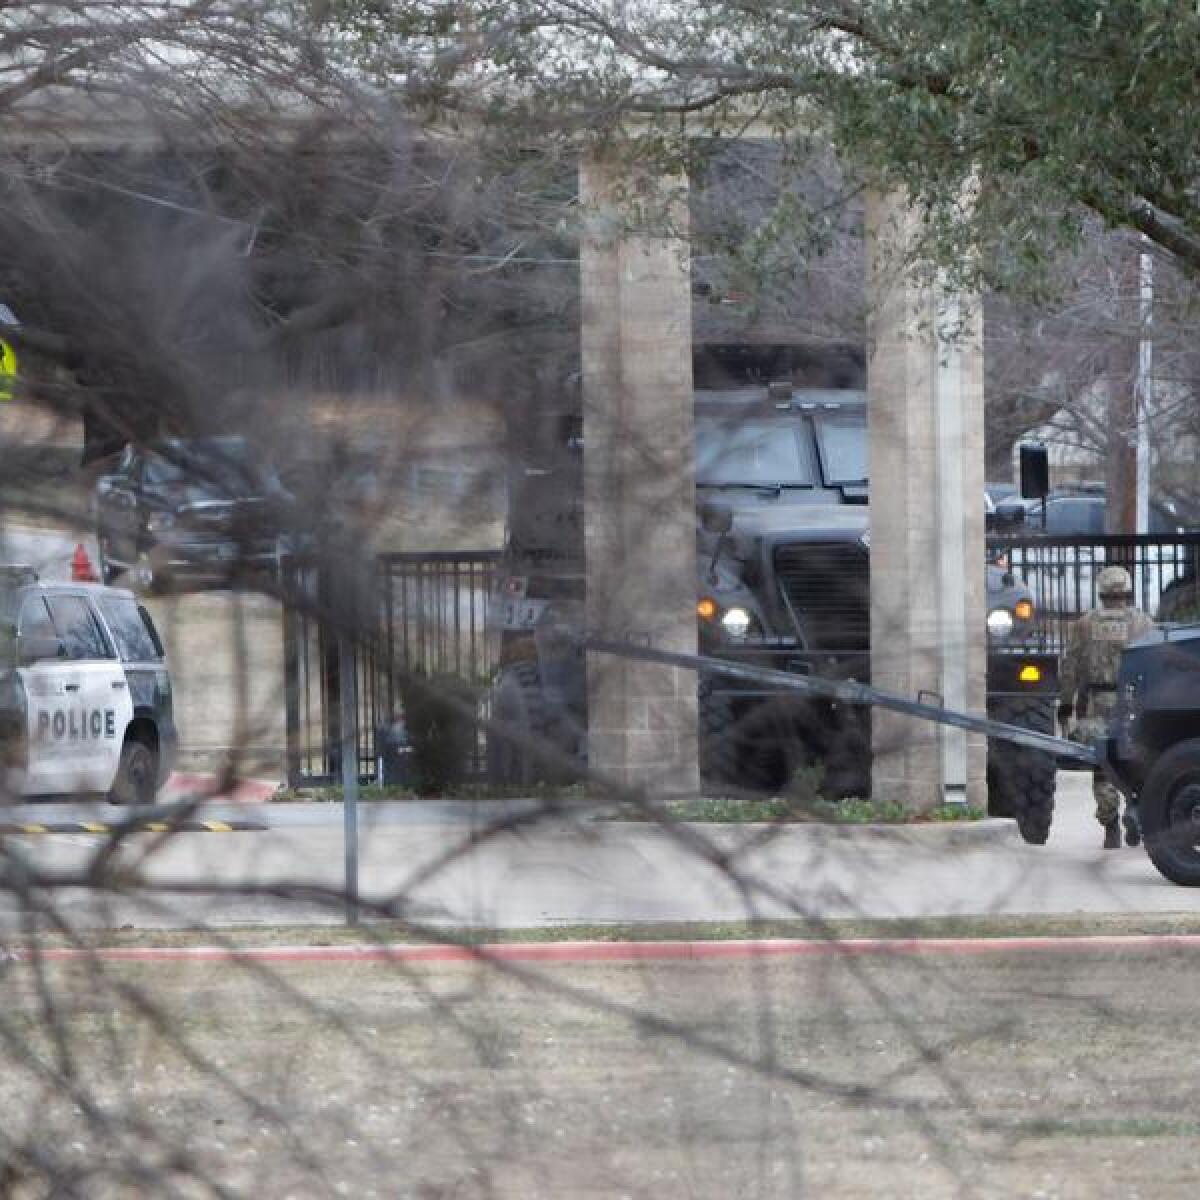 Texas synagogue hostage taker British